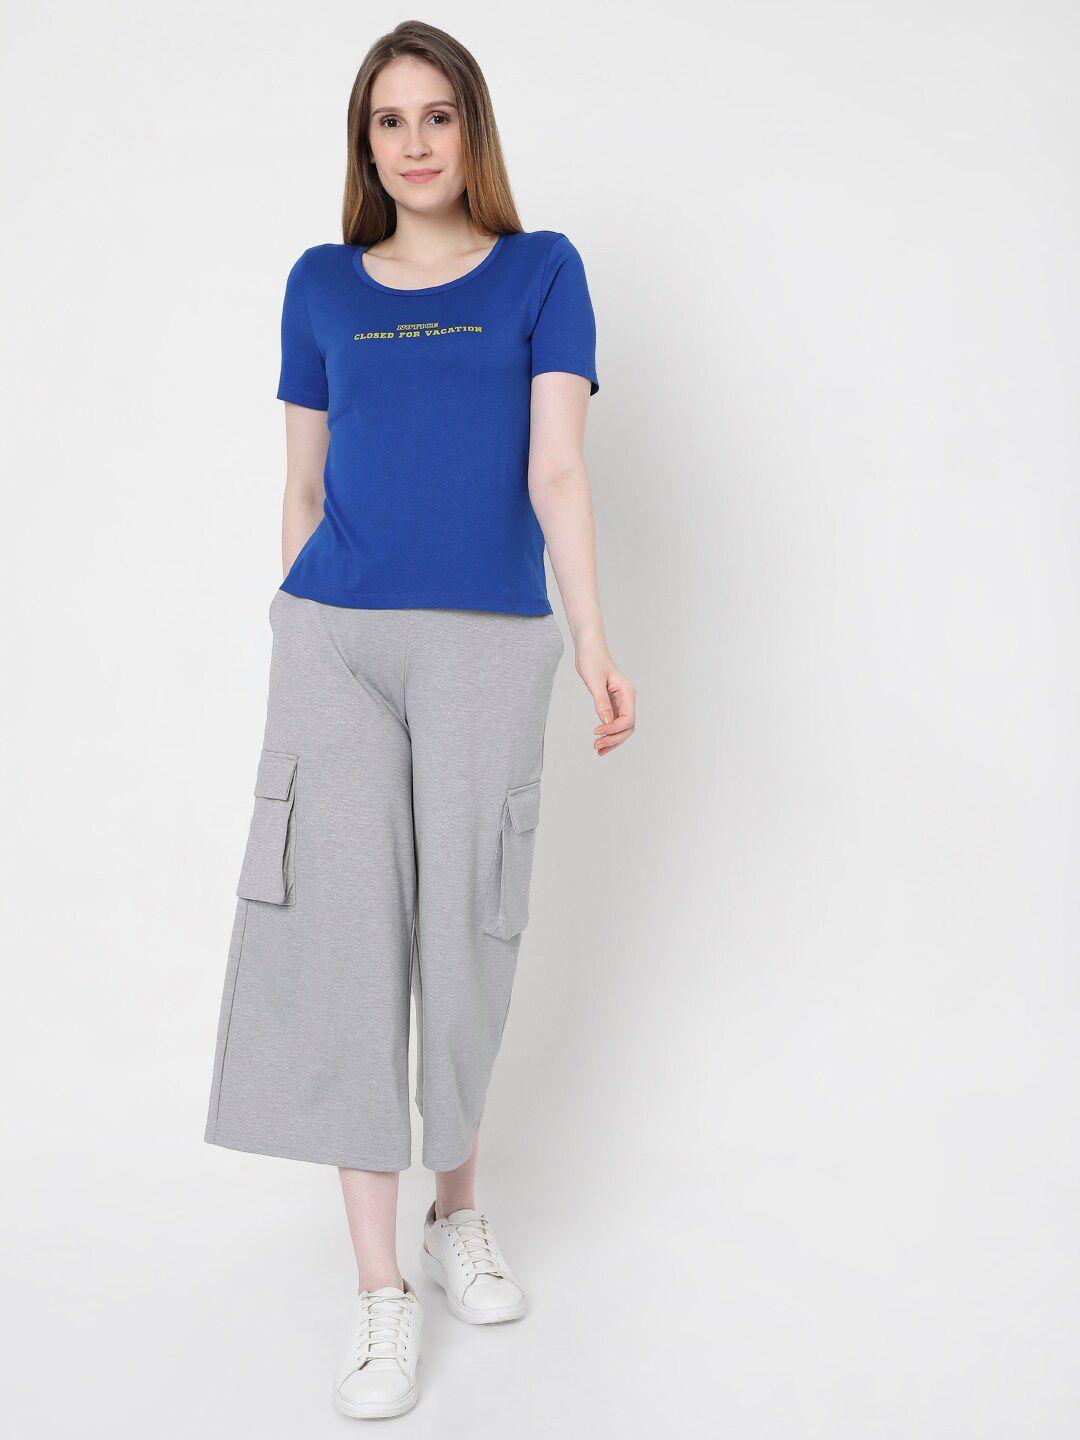 Vero Moda Women Blue Typography Printed Slim Fit T-shirt